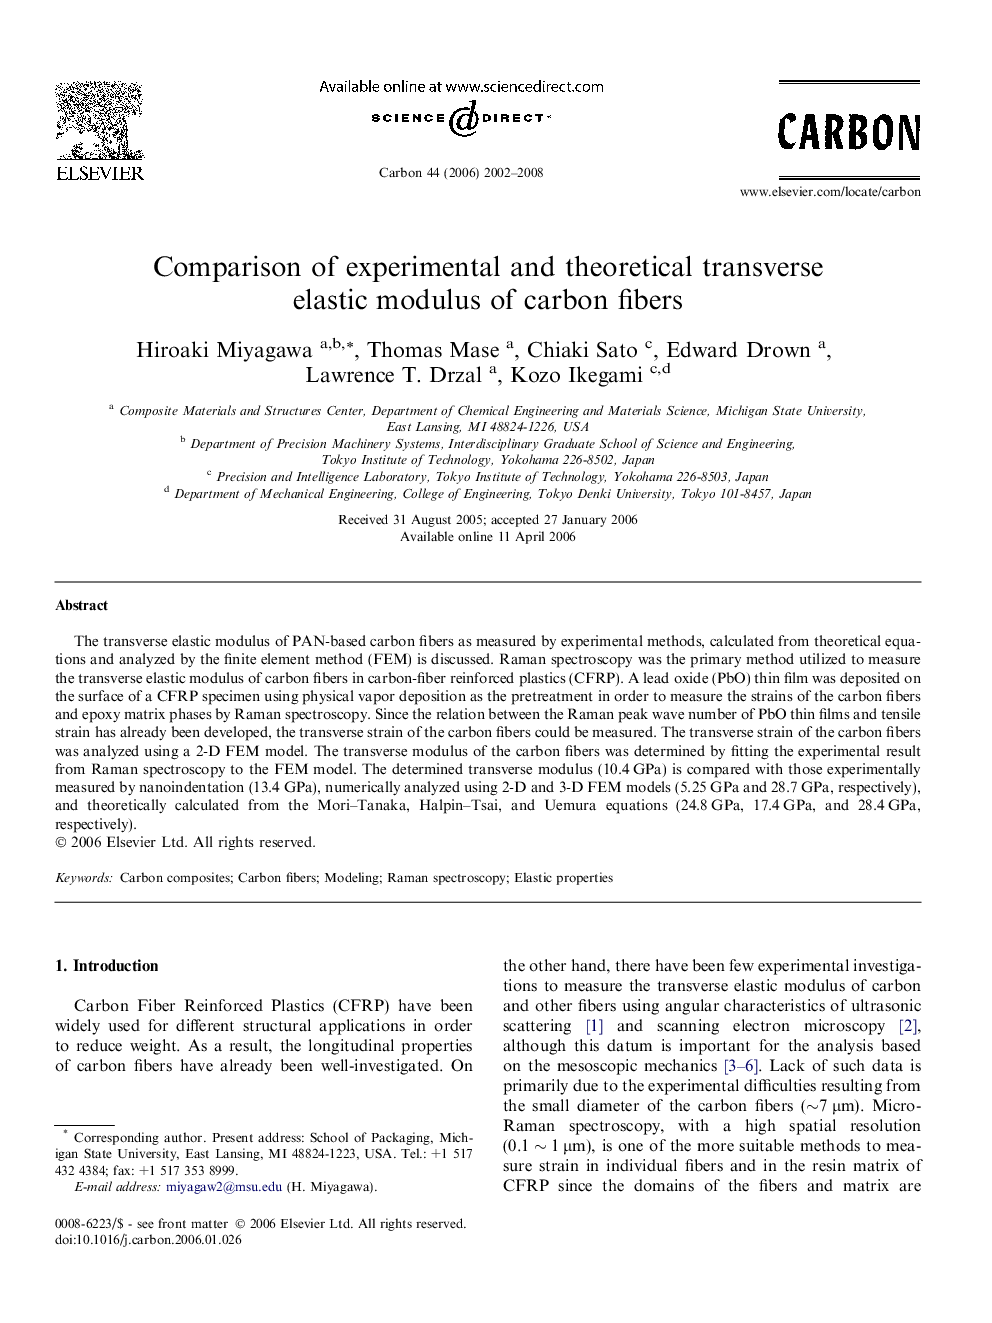 Comparison of experimental and theoretical transverse elastic modulus of carbon fibers